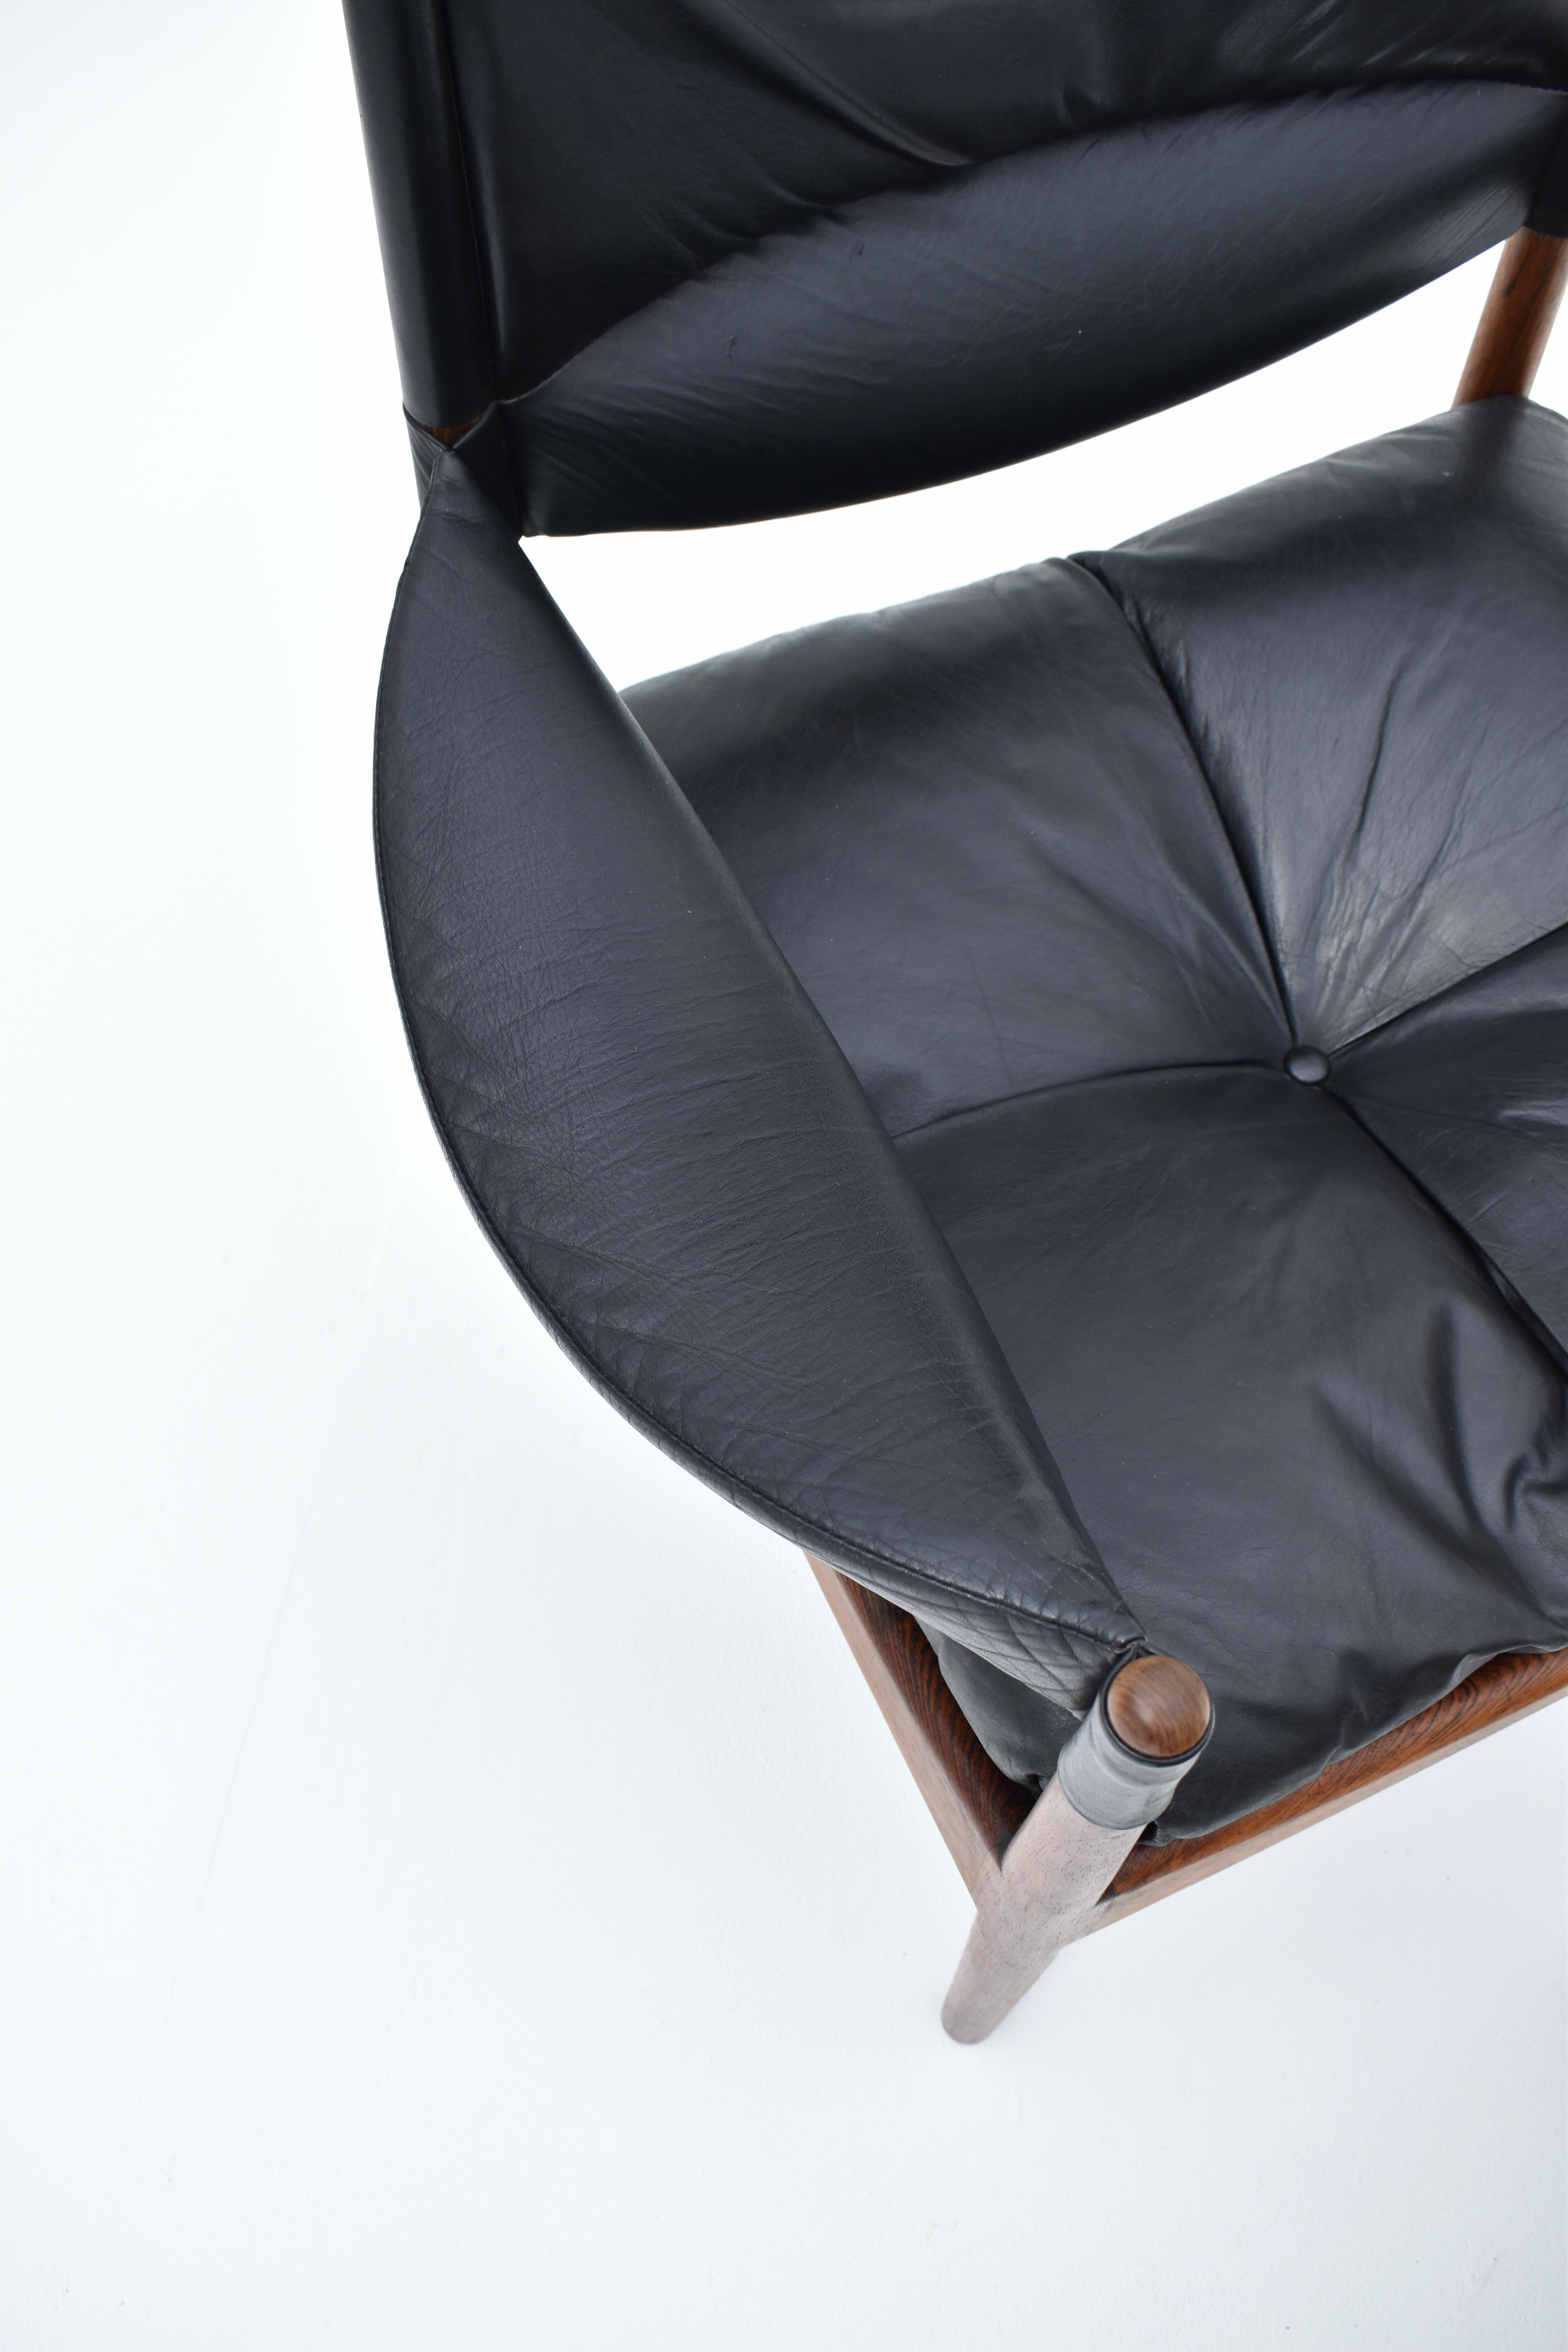 Kristian Vedel Rosewood & Leather 'Modus' Chair & Footstool For Soren Willadsen 6